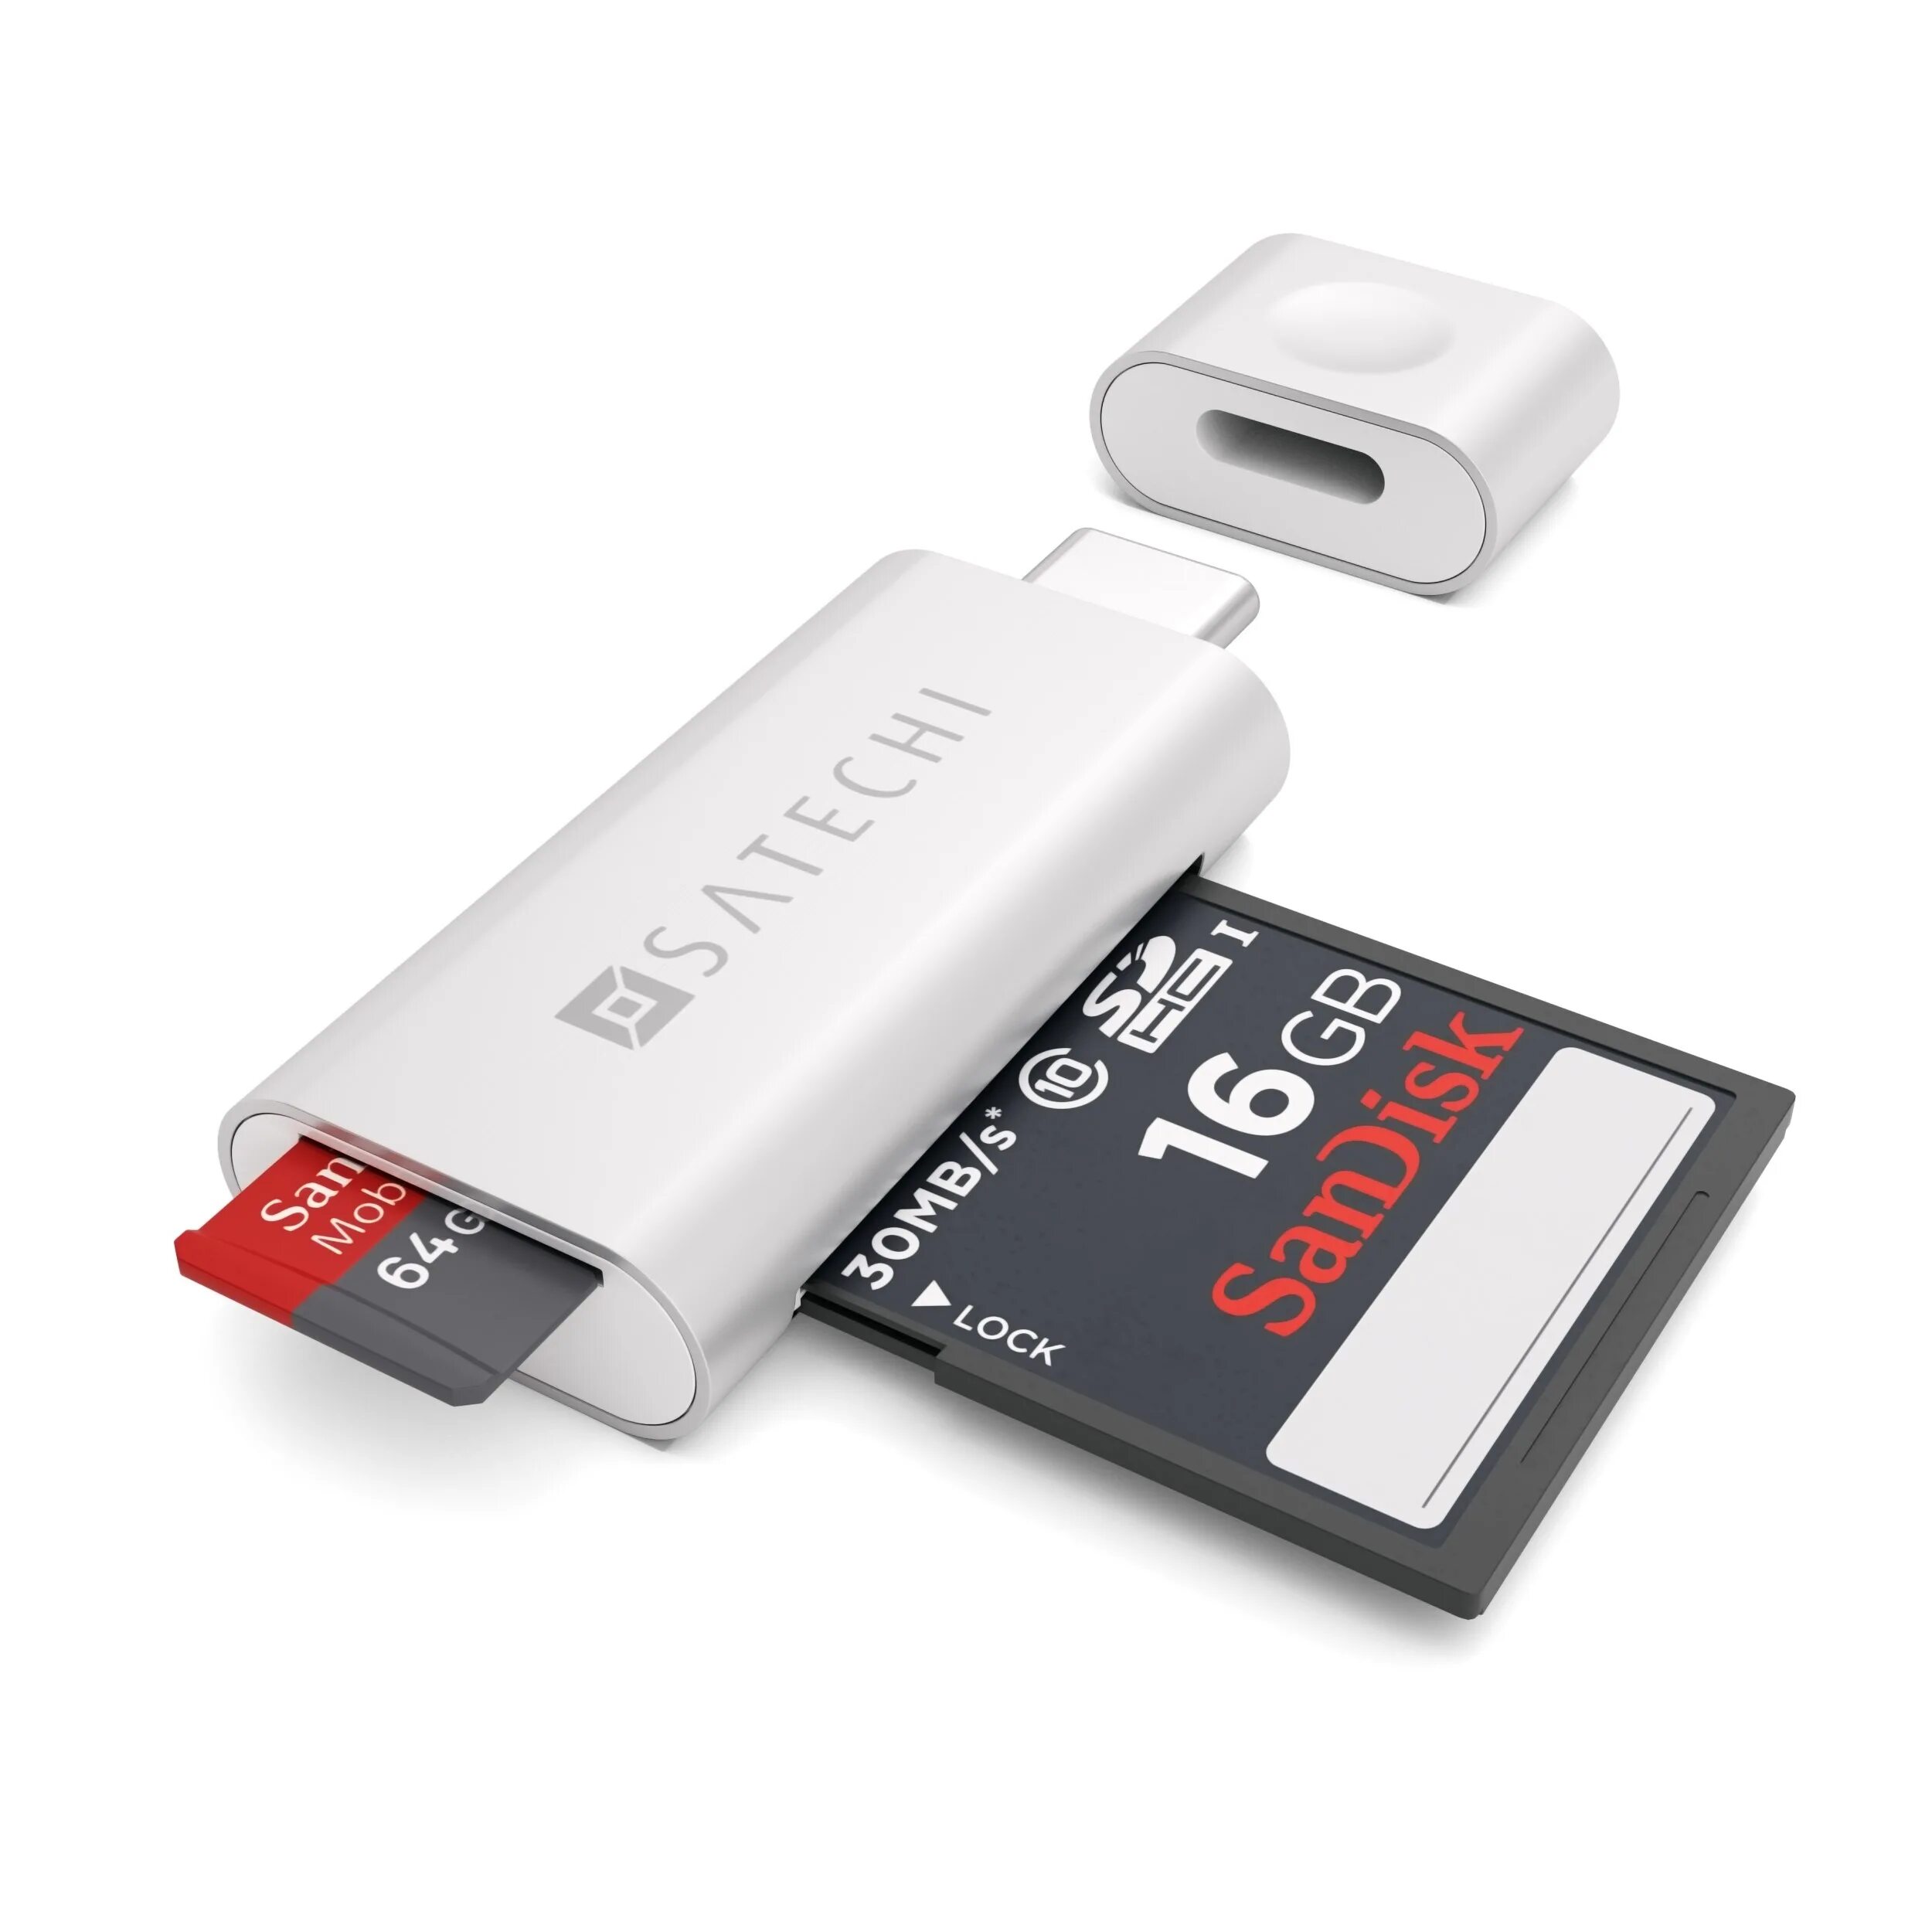 Тайпси флешка. Картридер Type-c MICROSD/SD. Картридер USB 3.0 SD Micro Card. Картридер для микро SD Type c. Satechi Aluminum Type-c Micro/SD Card Reader f.